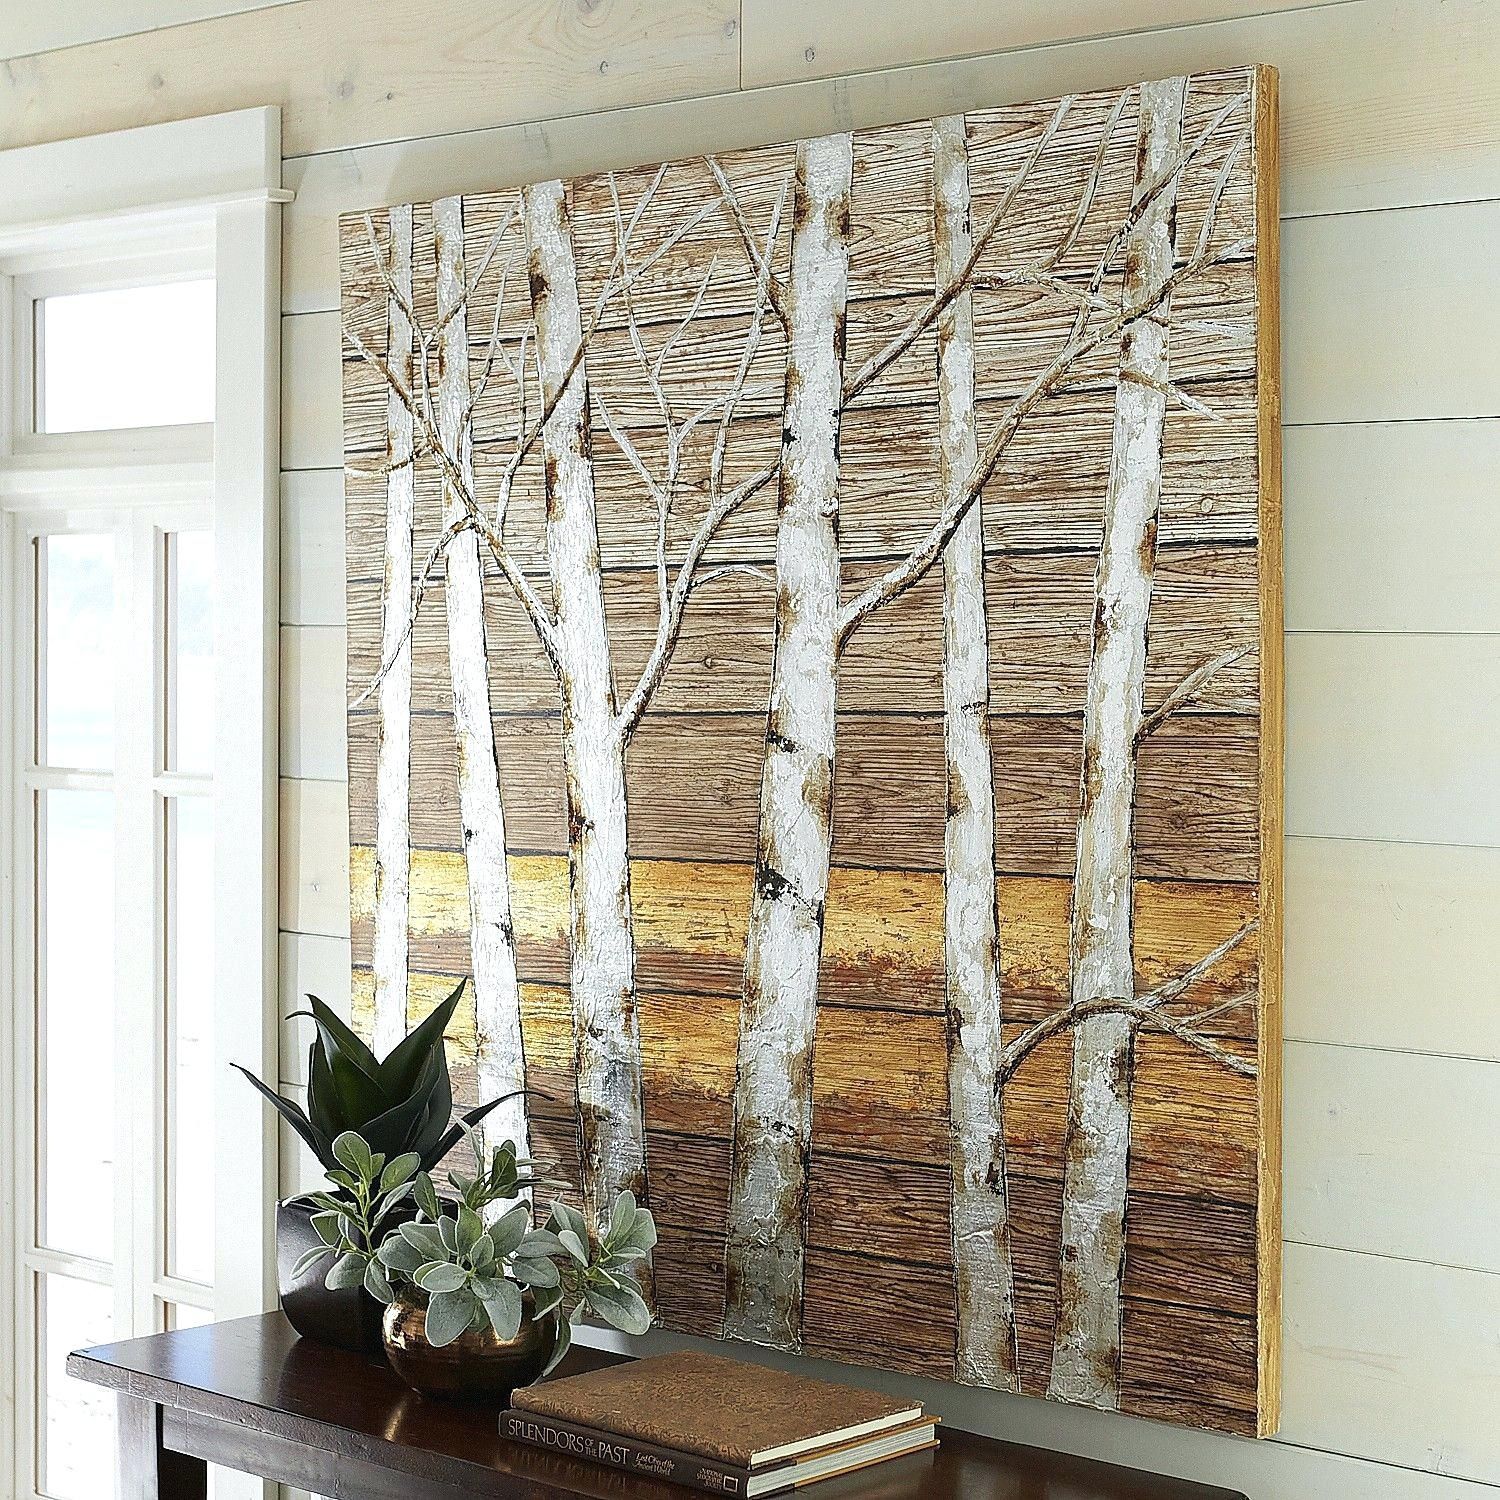 Metallic Birch Trees Wall Art Pier 1 Imports One Decor Within Pier 1 Wall Art (Photo 12 of 20)